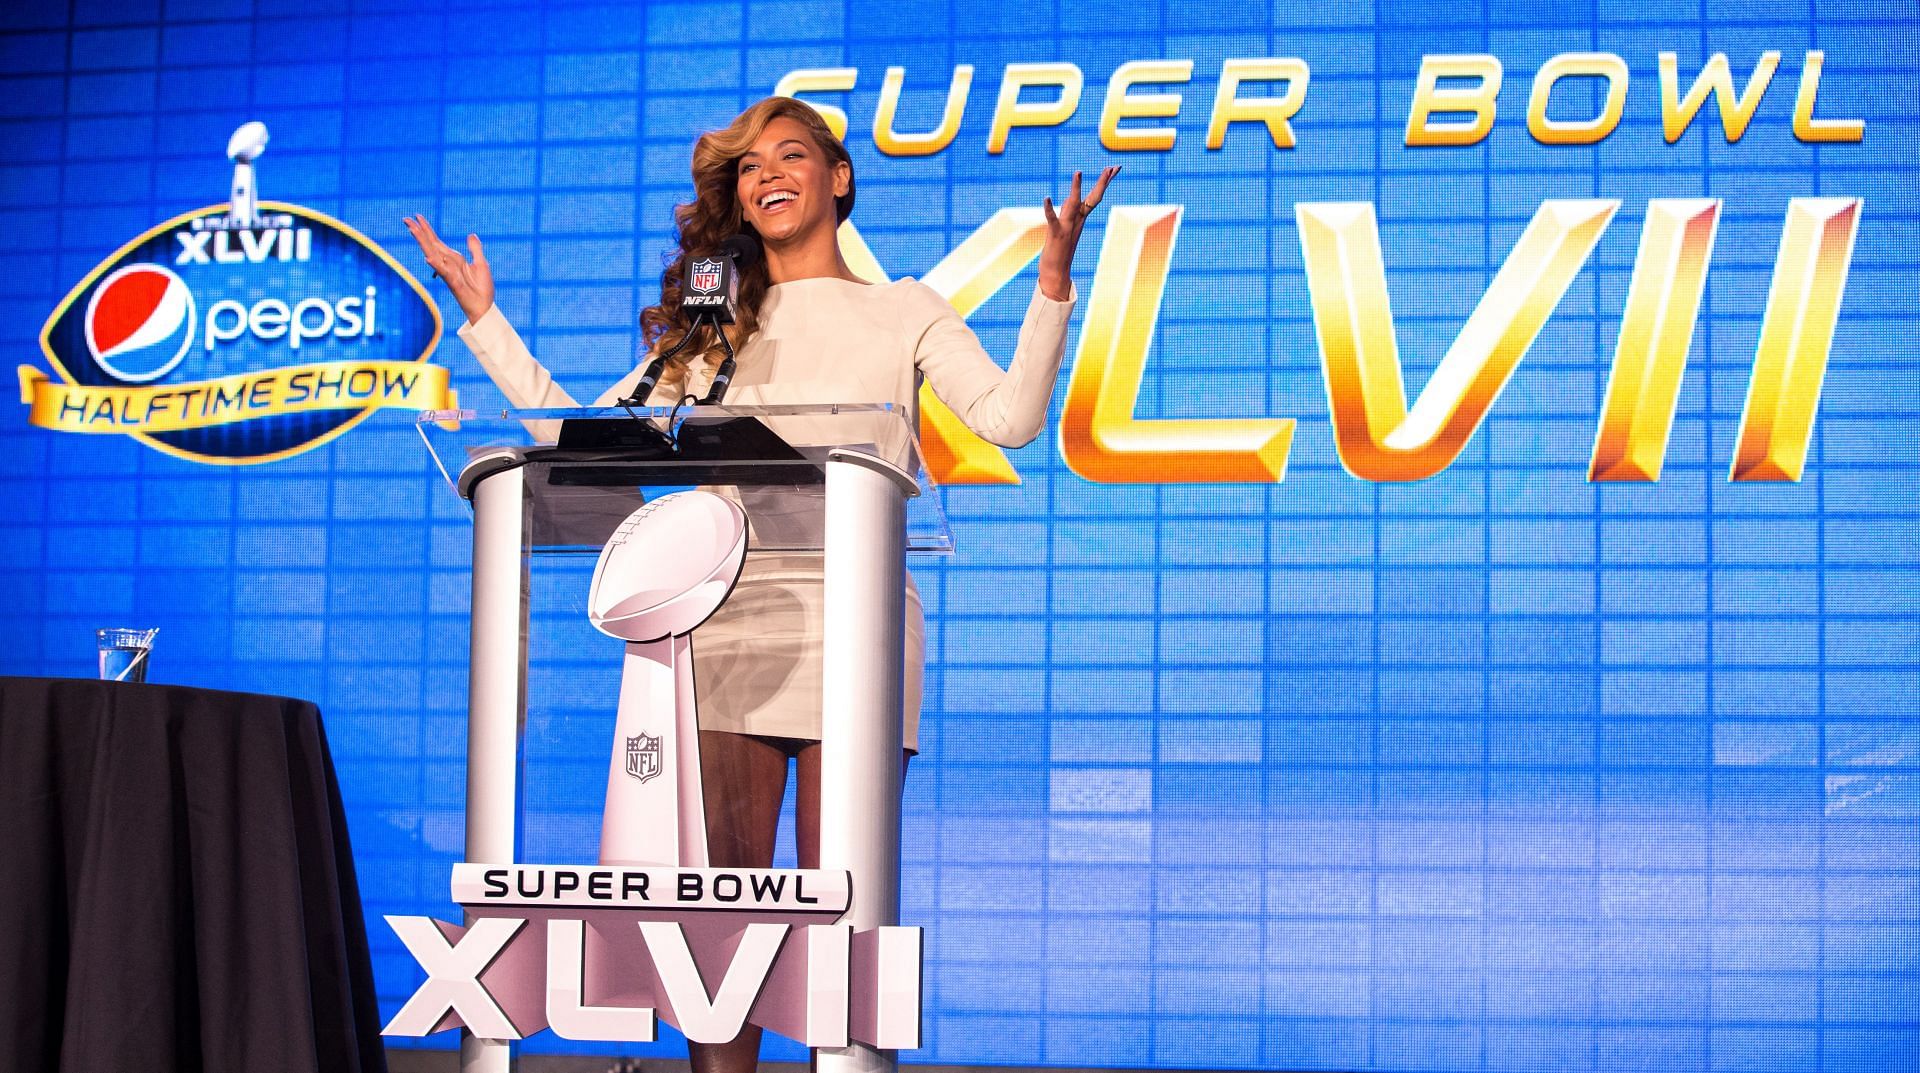 Pepsi Super Bowl XLVII Halftime Show Press Conference